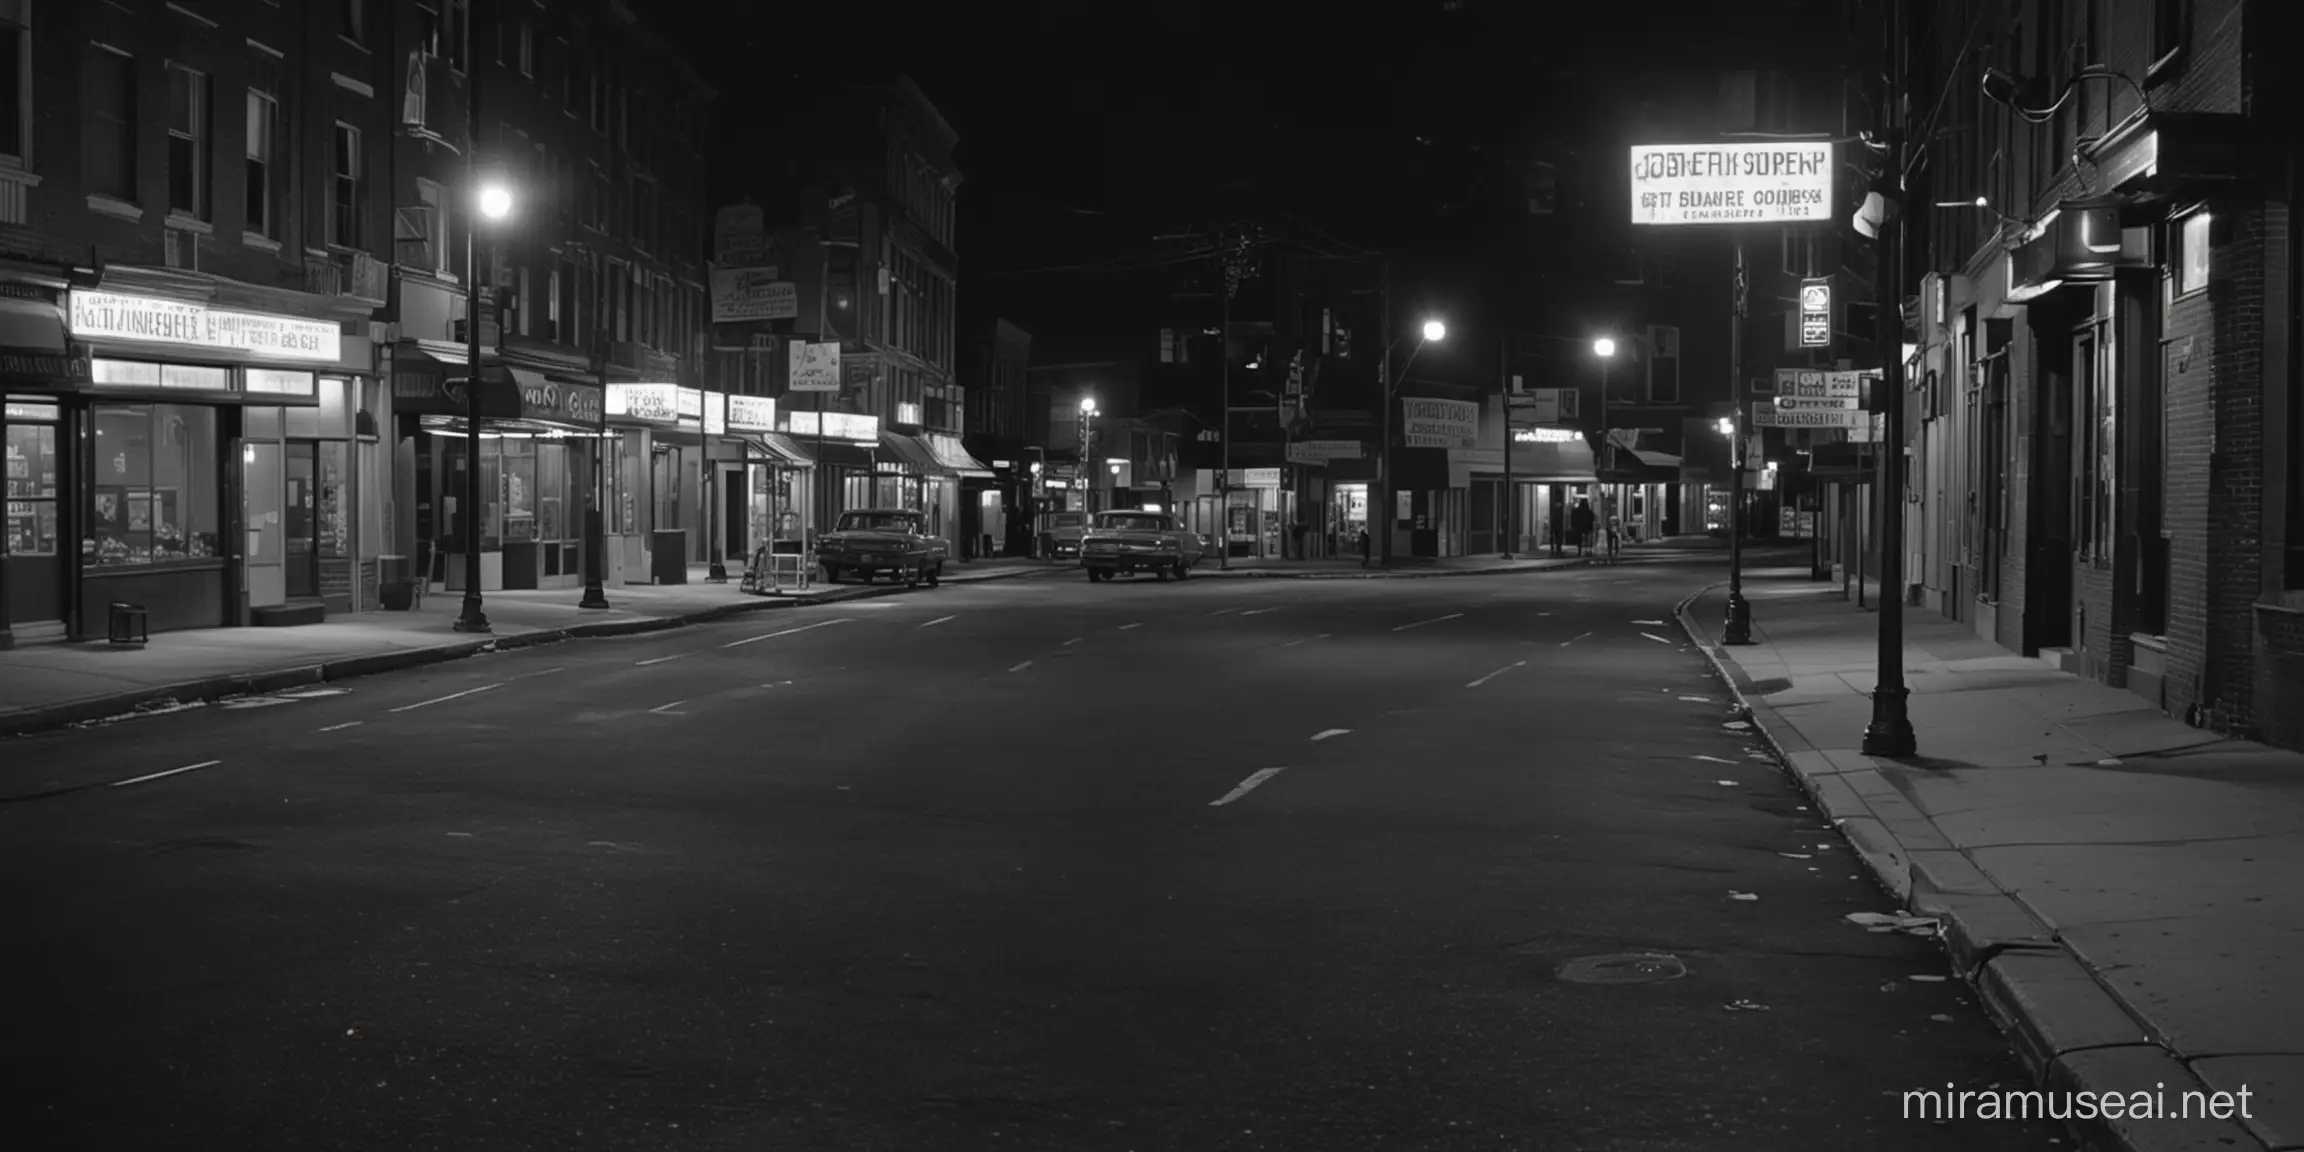 1960s New Jersey Street Night Scene